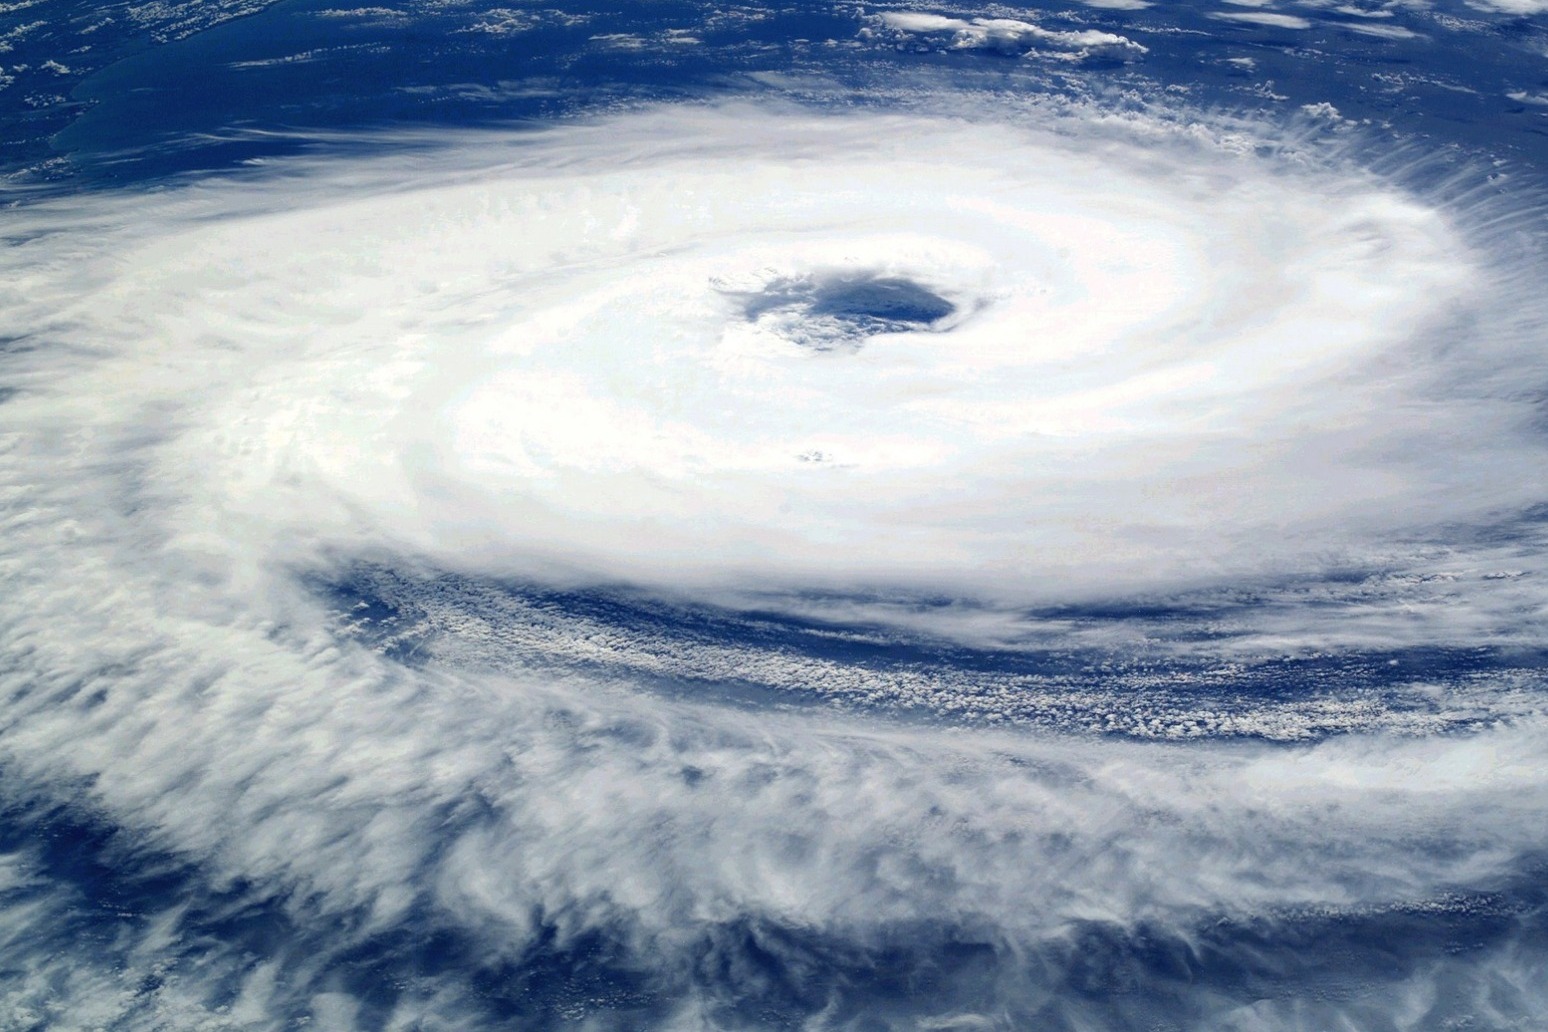 India plans to evacuate 800,000 as cyclone nears east coast 